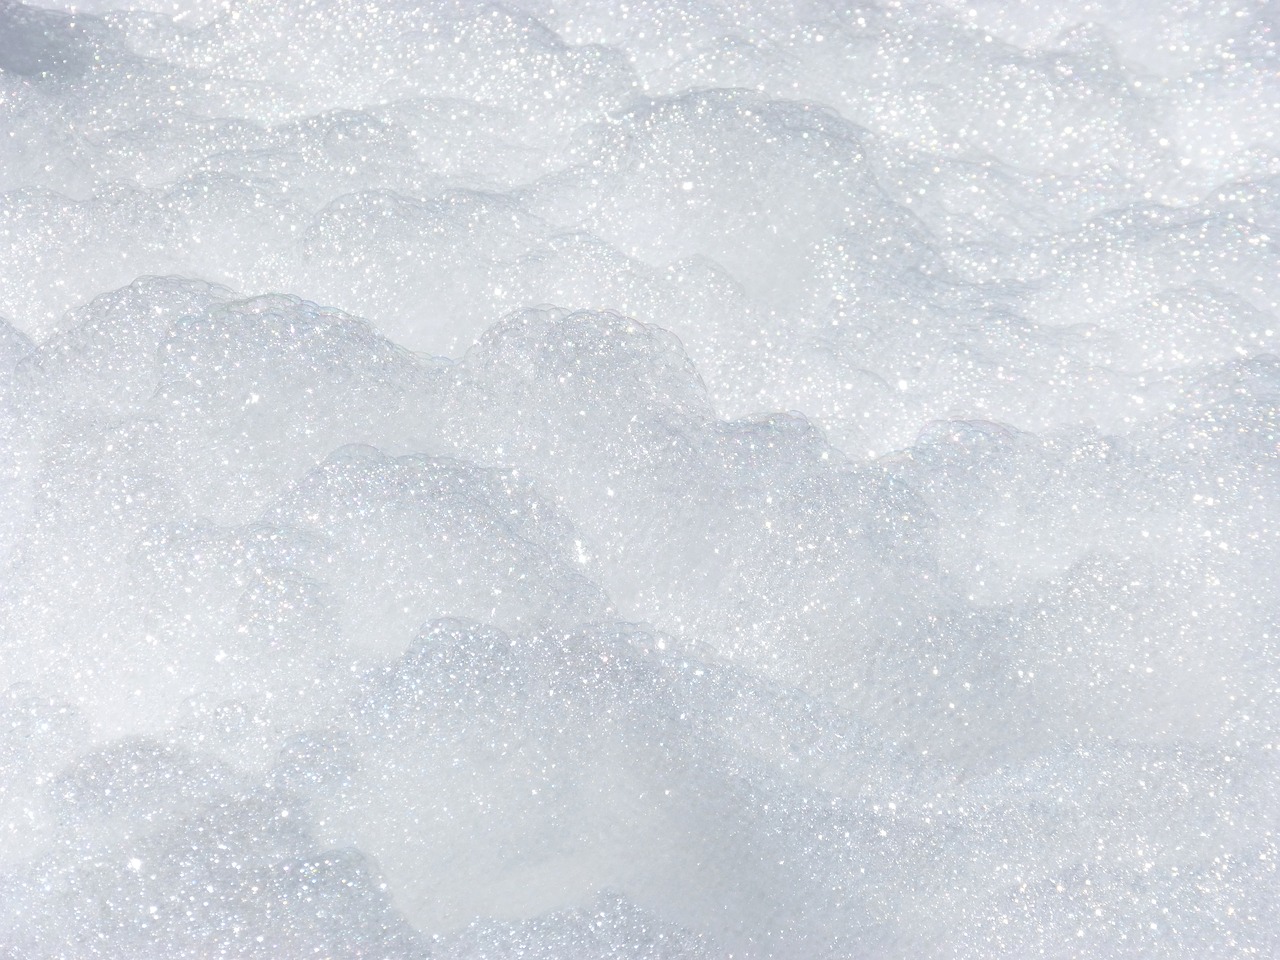 foam background texture free photo